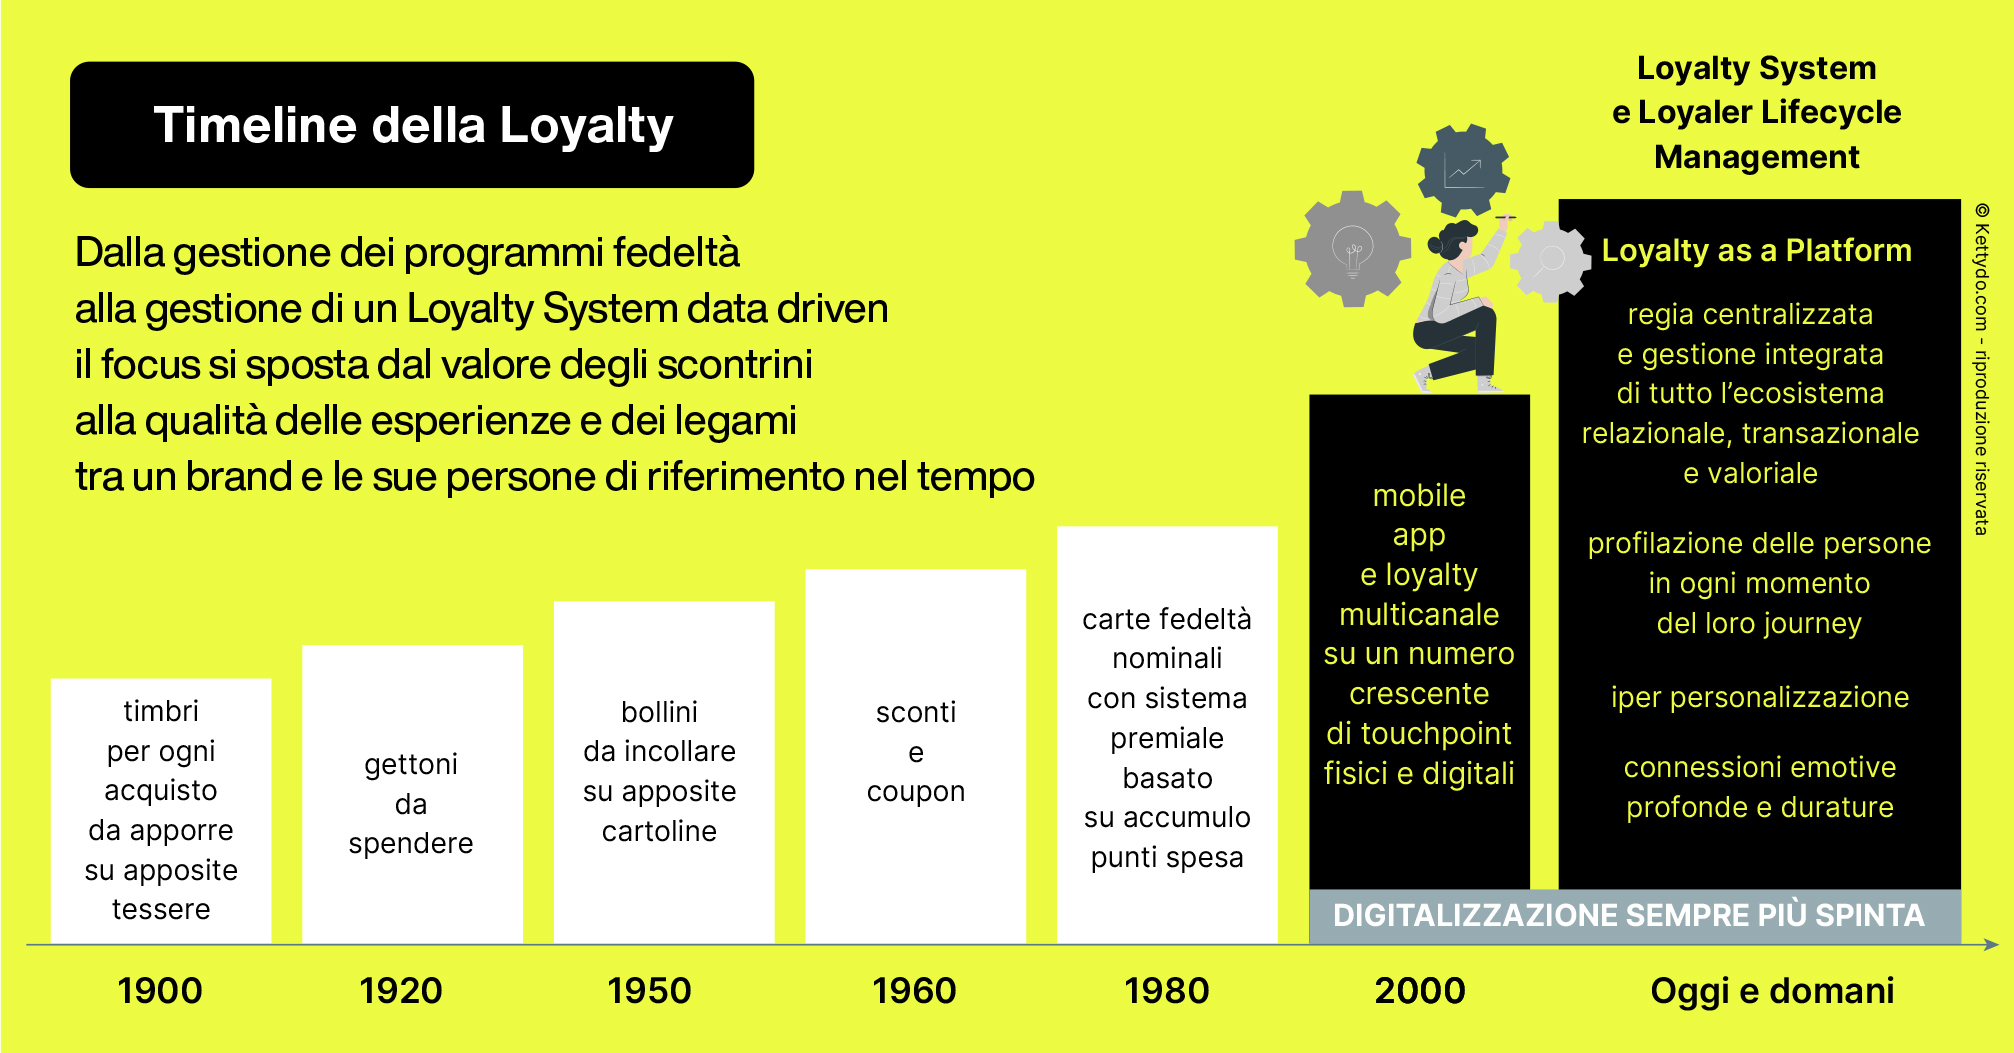 Loyalty-as-a-Platform